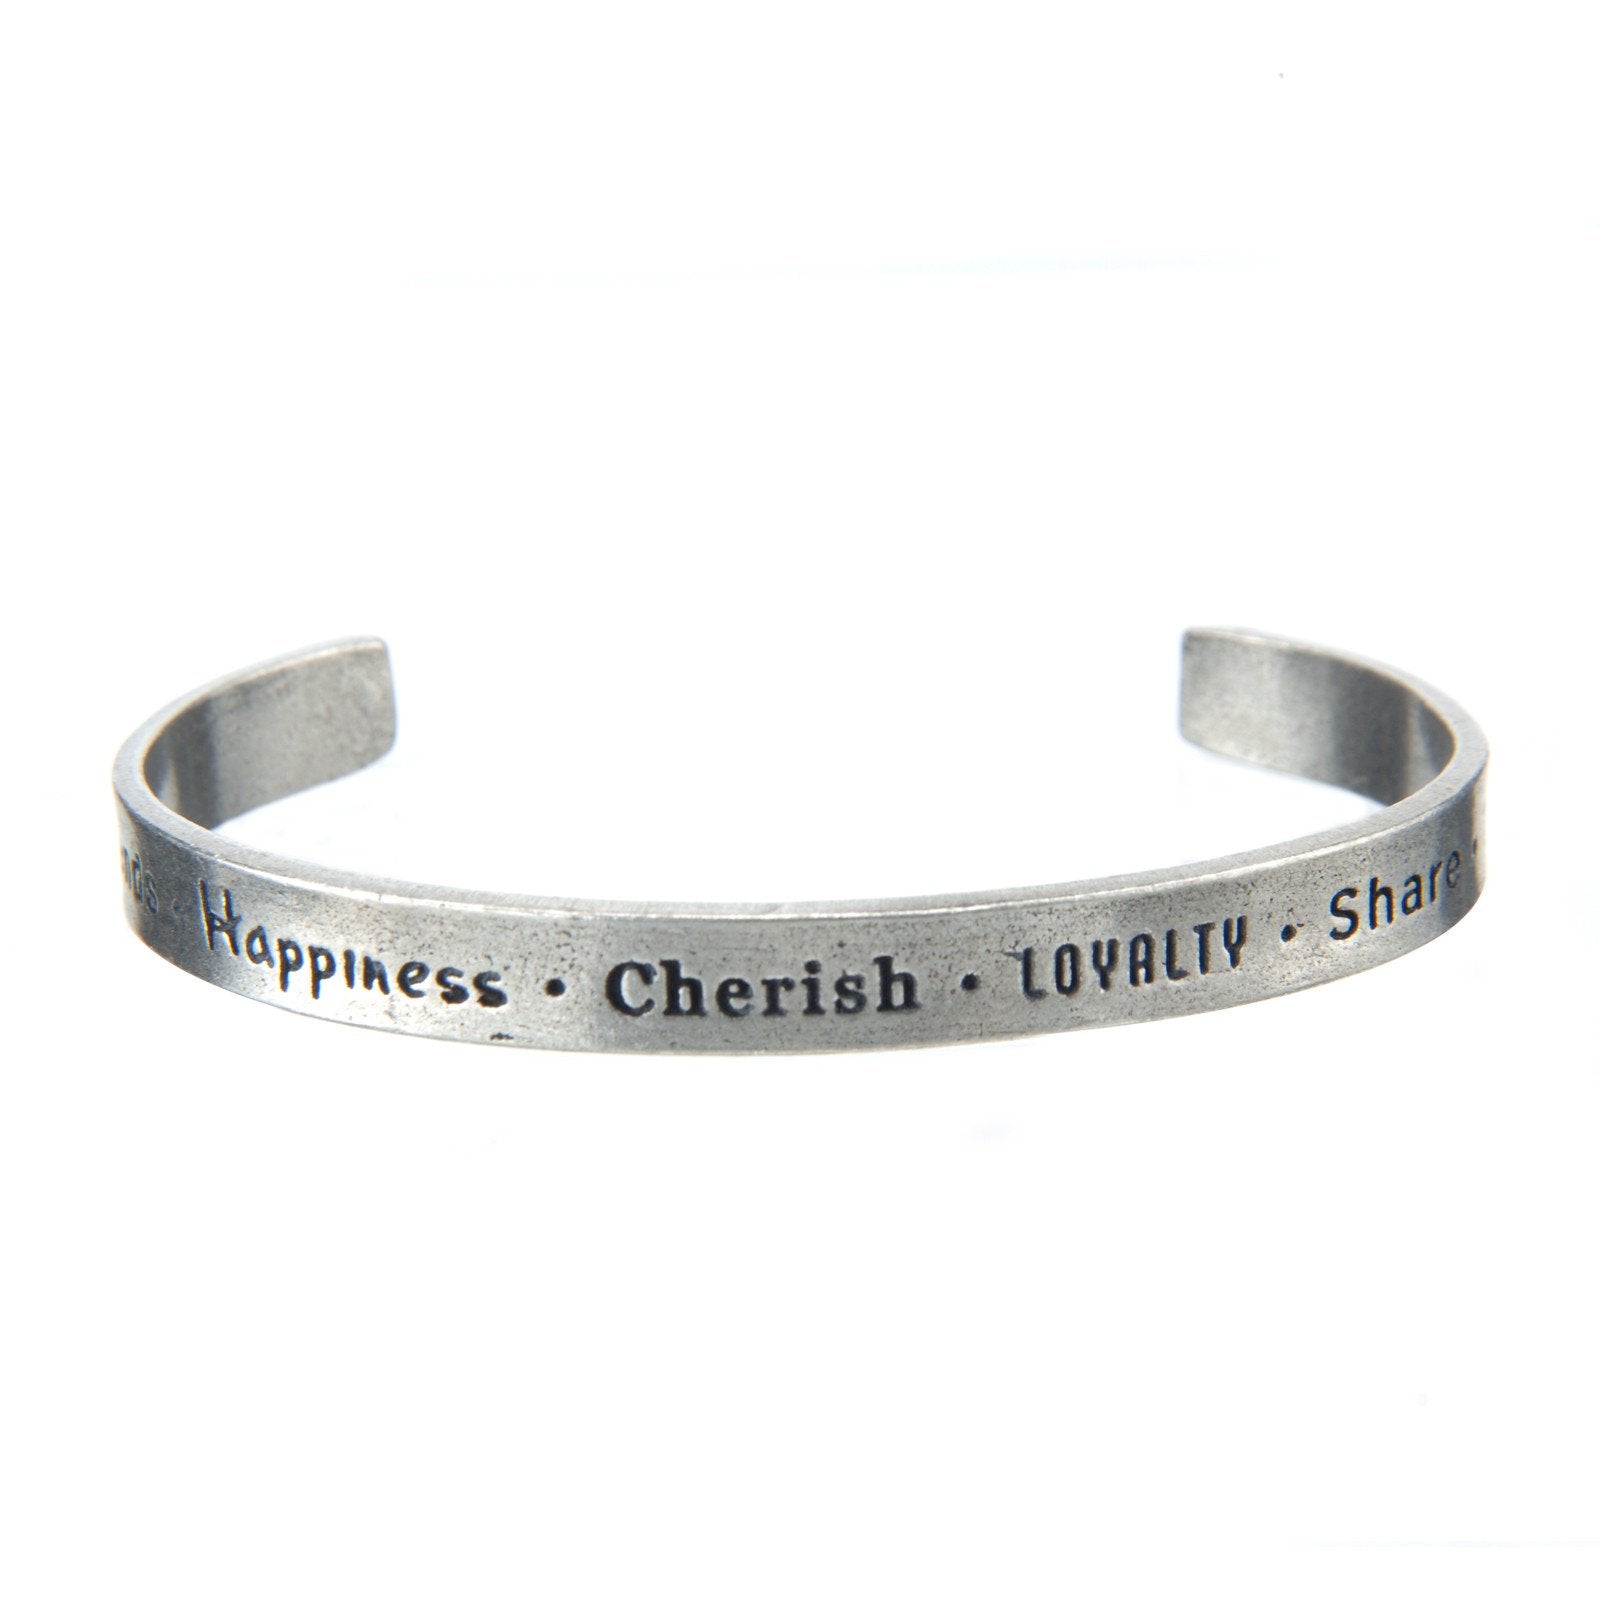 Friends-Happiness-Cherish Loyalty Share Trust Quotable Cuff Bracelet